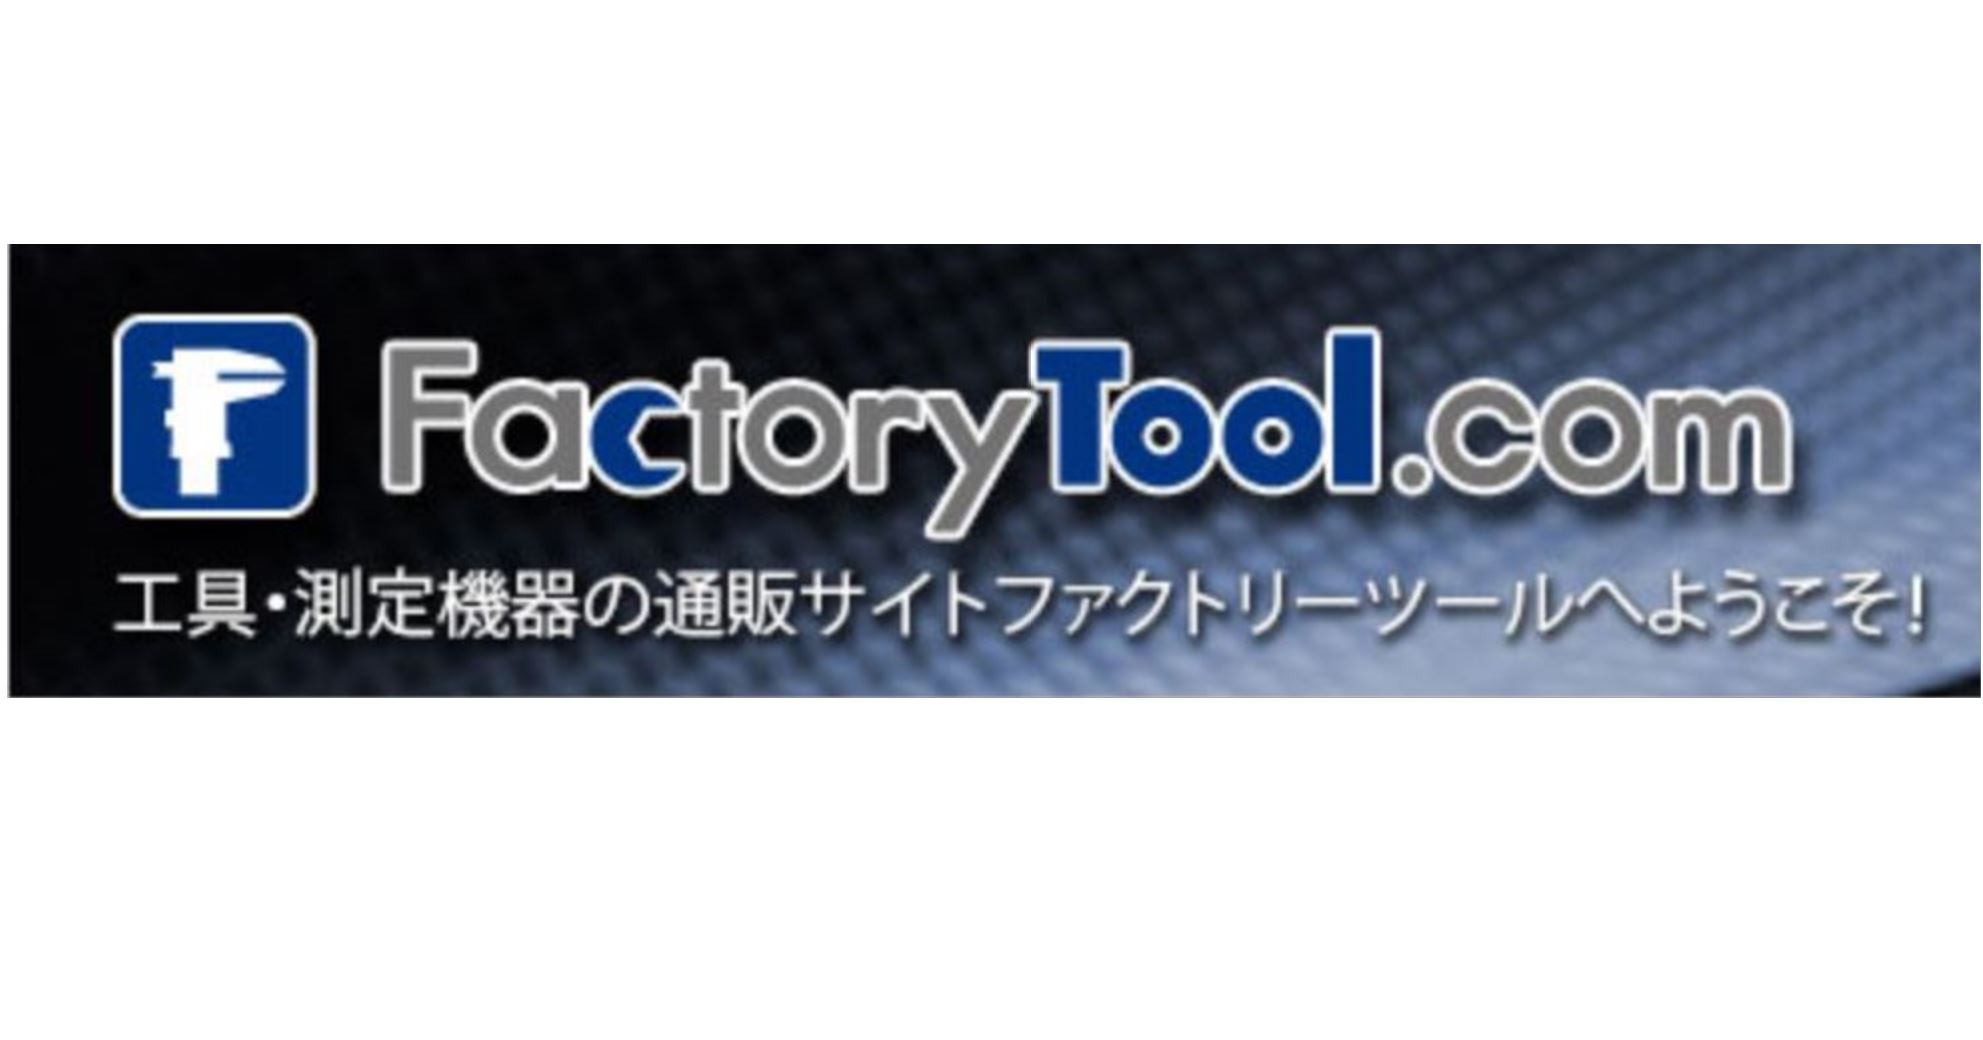 Factory tool バナー②